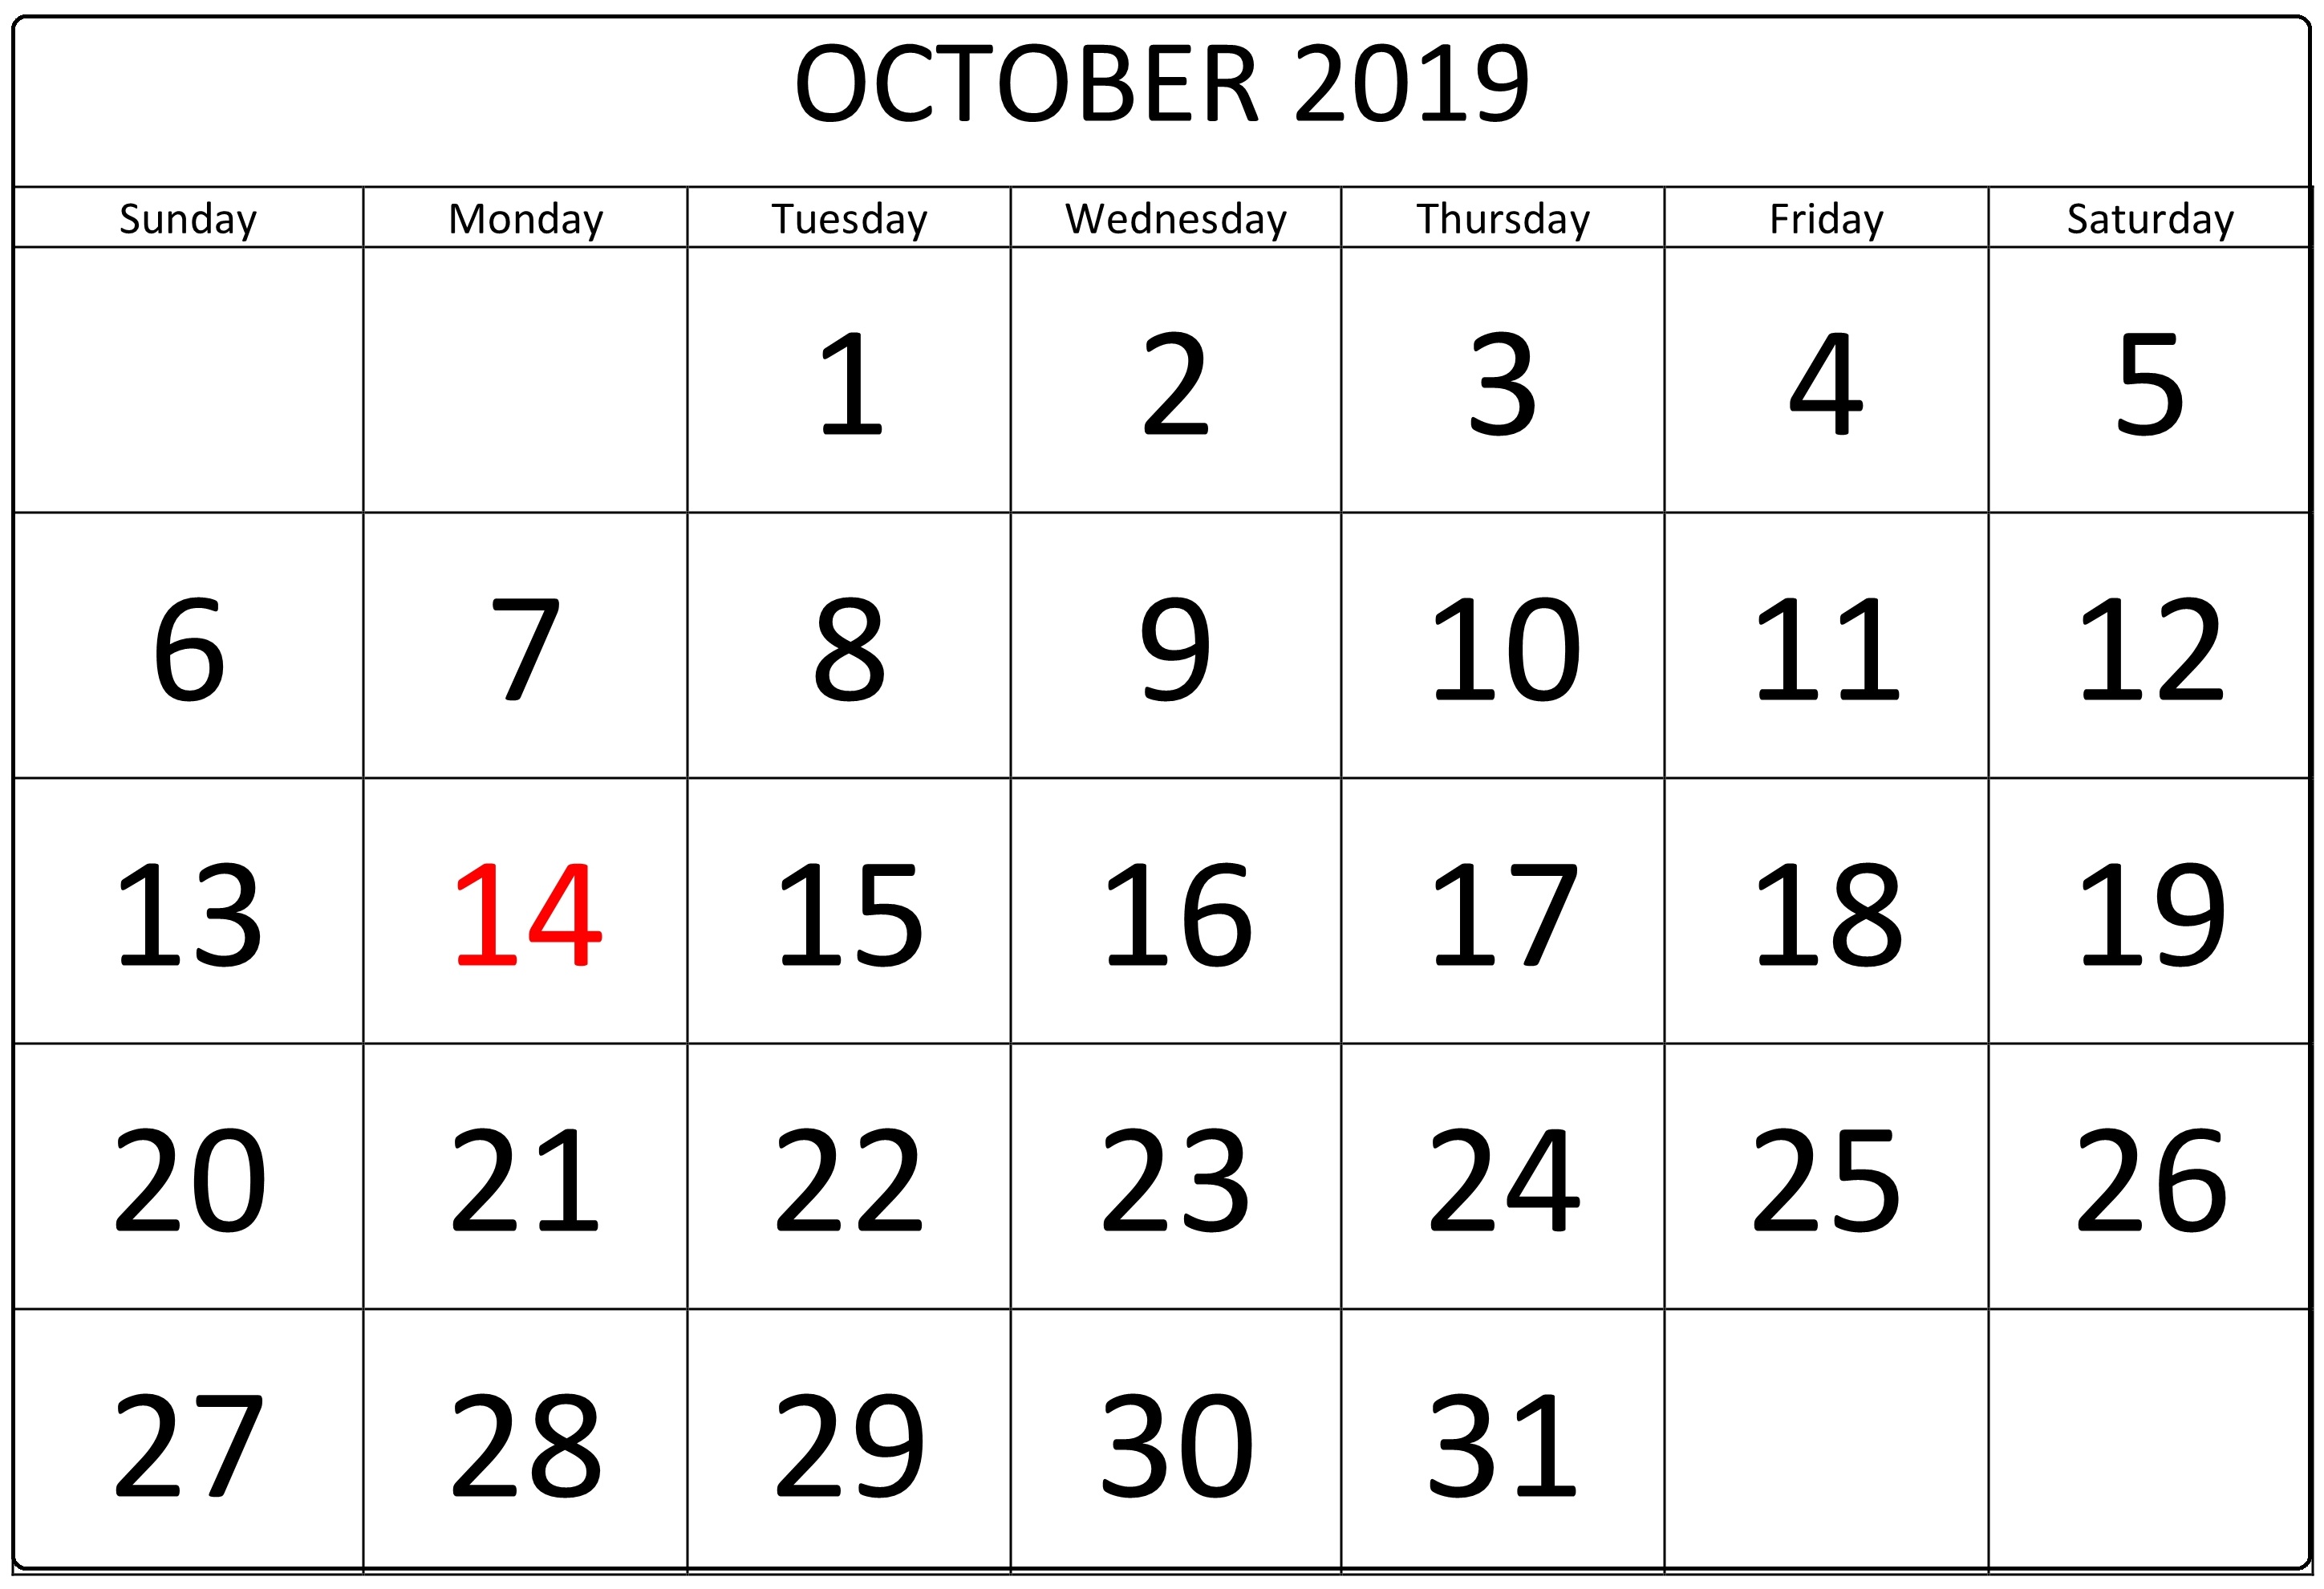 October 2019 Calendar Template